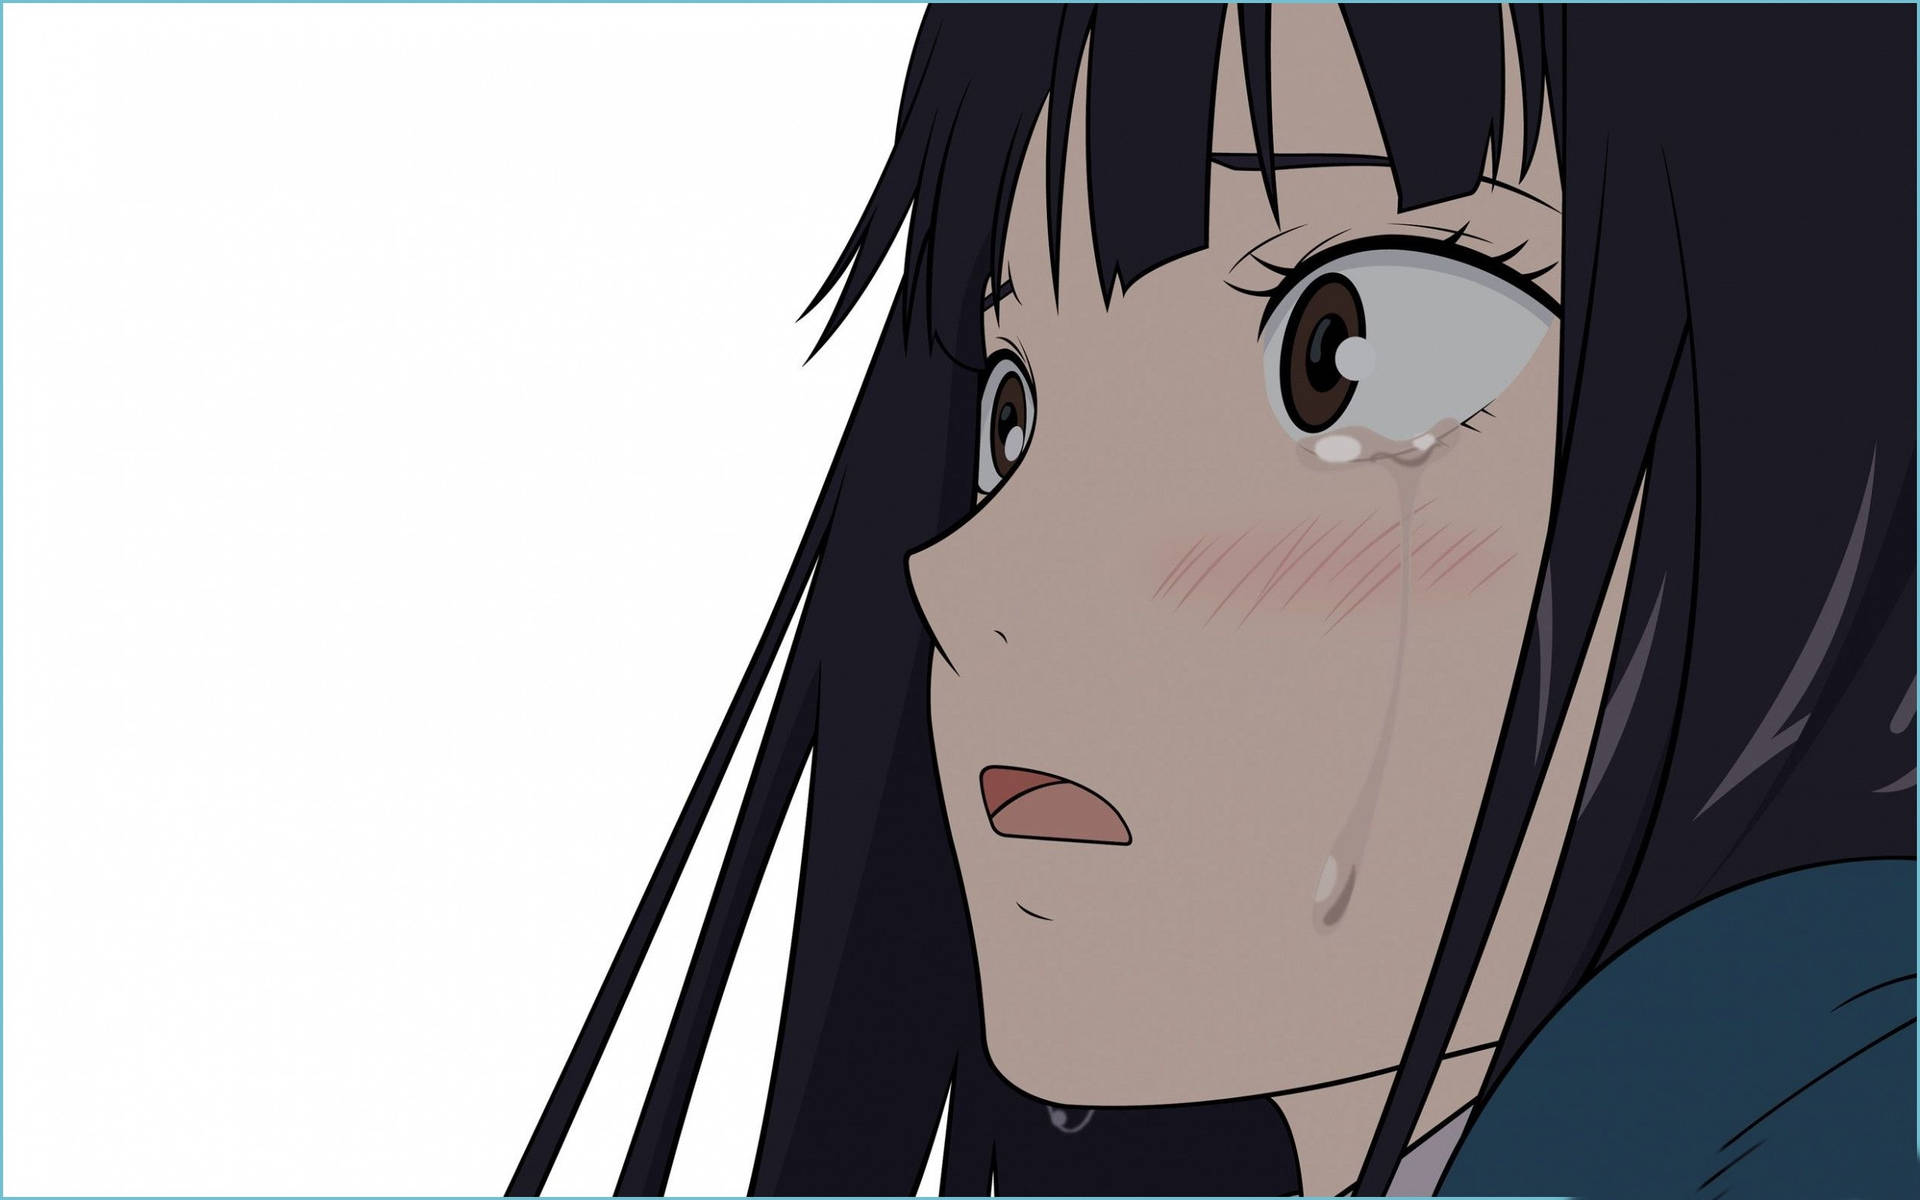 Blushing Depressed Anime Girl Background